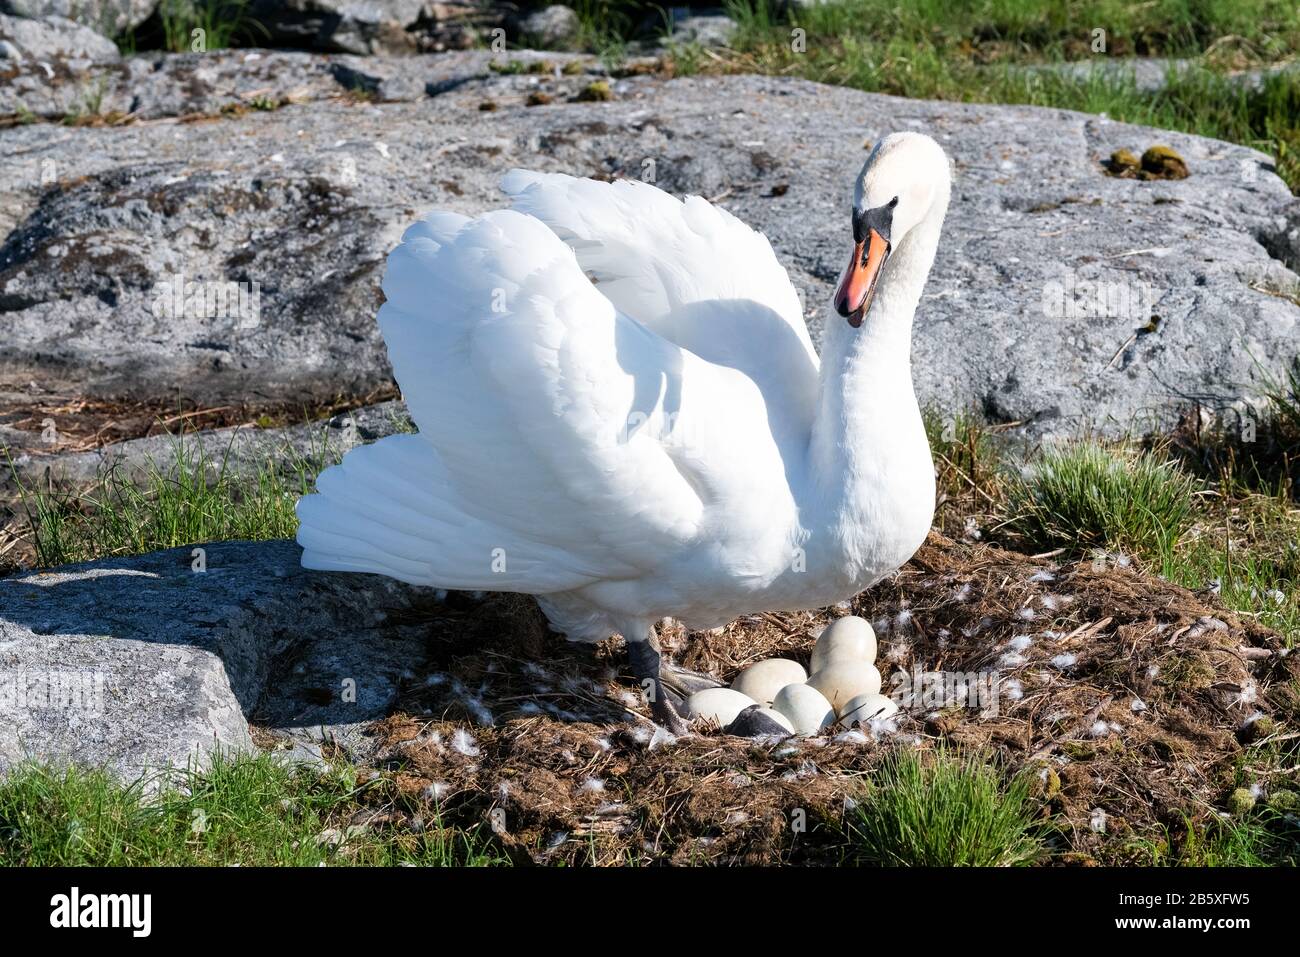 A nesting swan at Kutuhället island, Sipoo, Finland Stock Photo